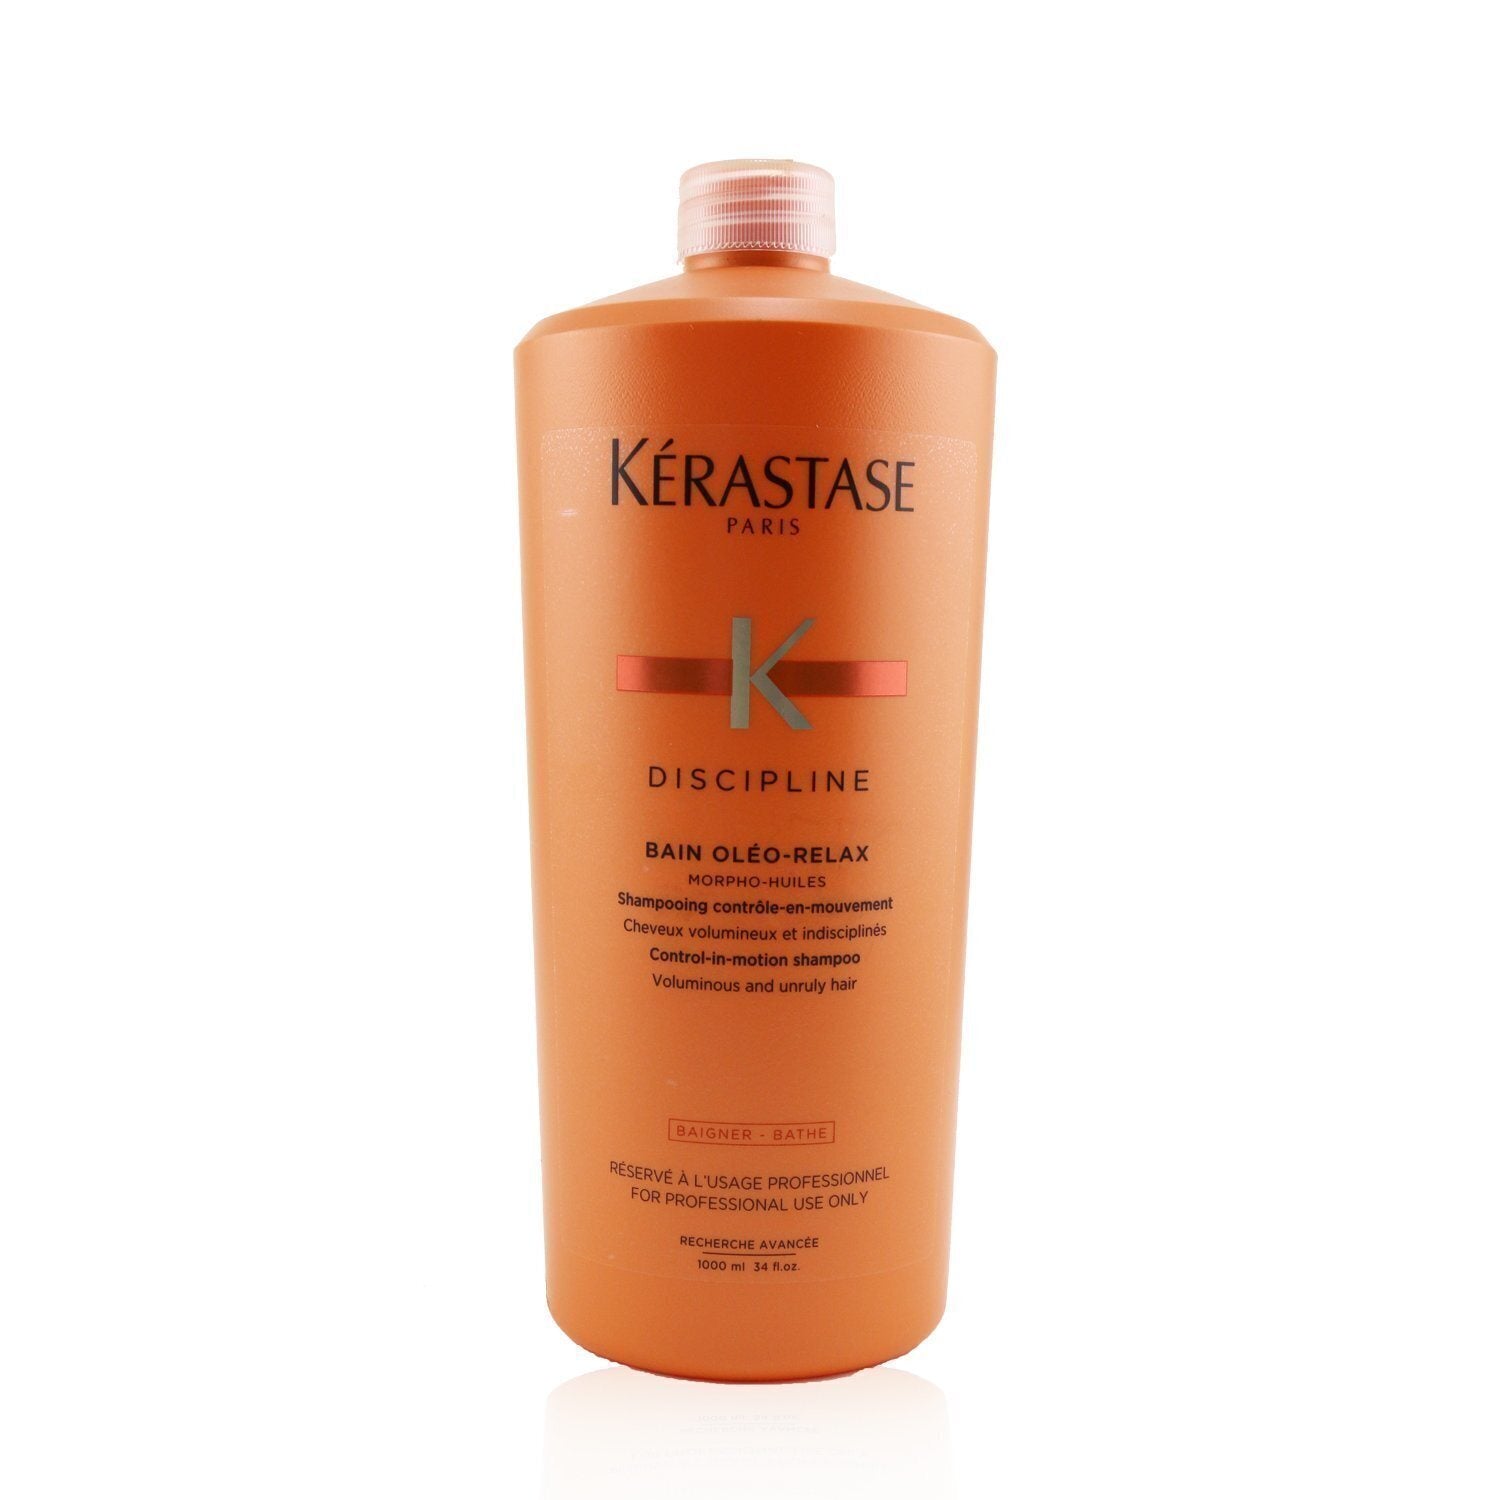 KERASTASE - Discipline Bain Oleo-Relax Control-In-Motion Shampoo (Voluminous and Unruly Hair) - 1000ml/34oz 3P's Inclusive Beauty